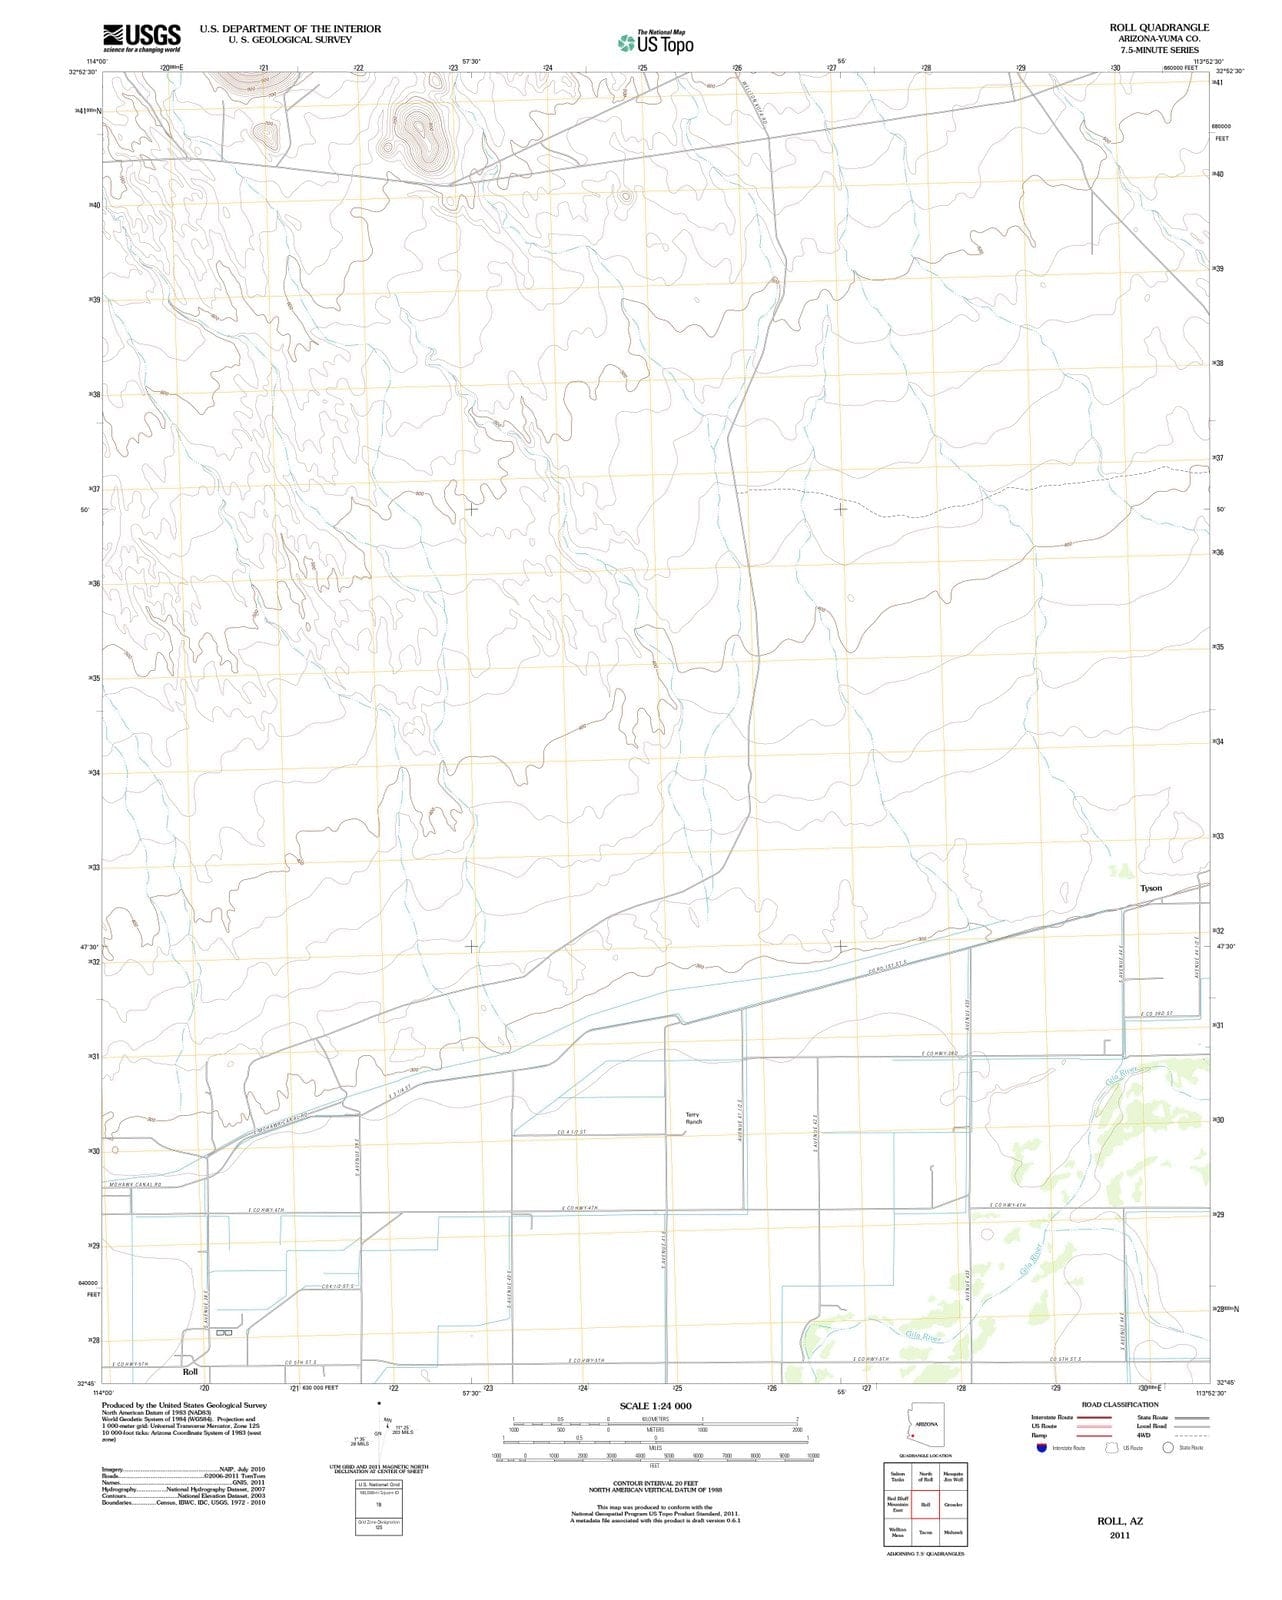 2011 Roll, AZ - Arizona - USGS Topographic Map